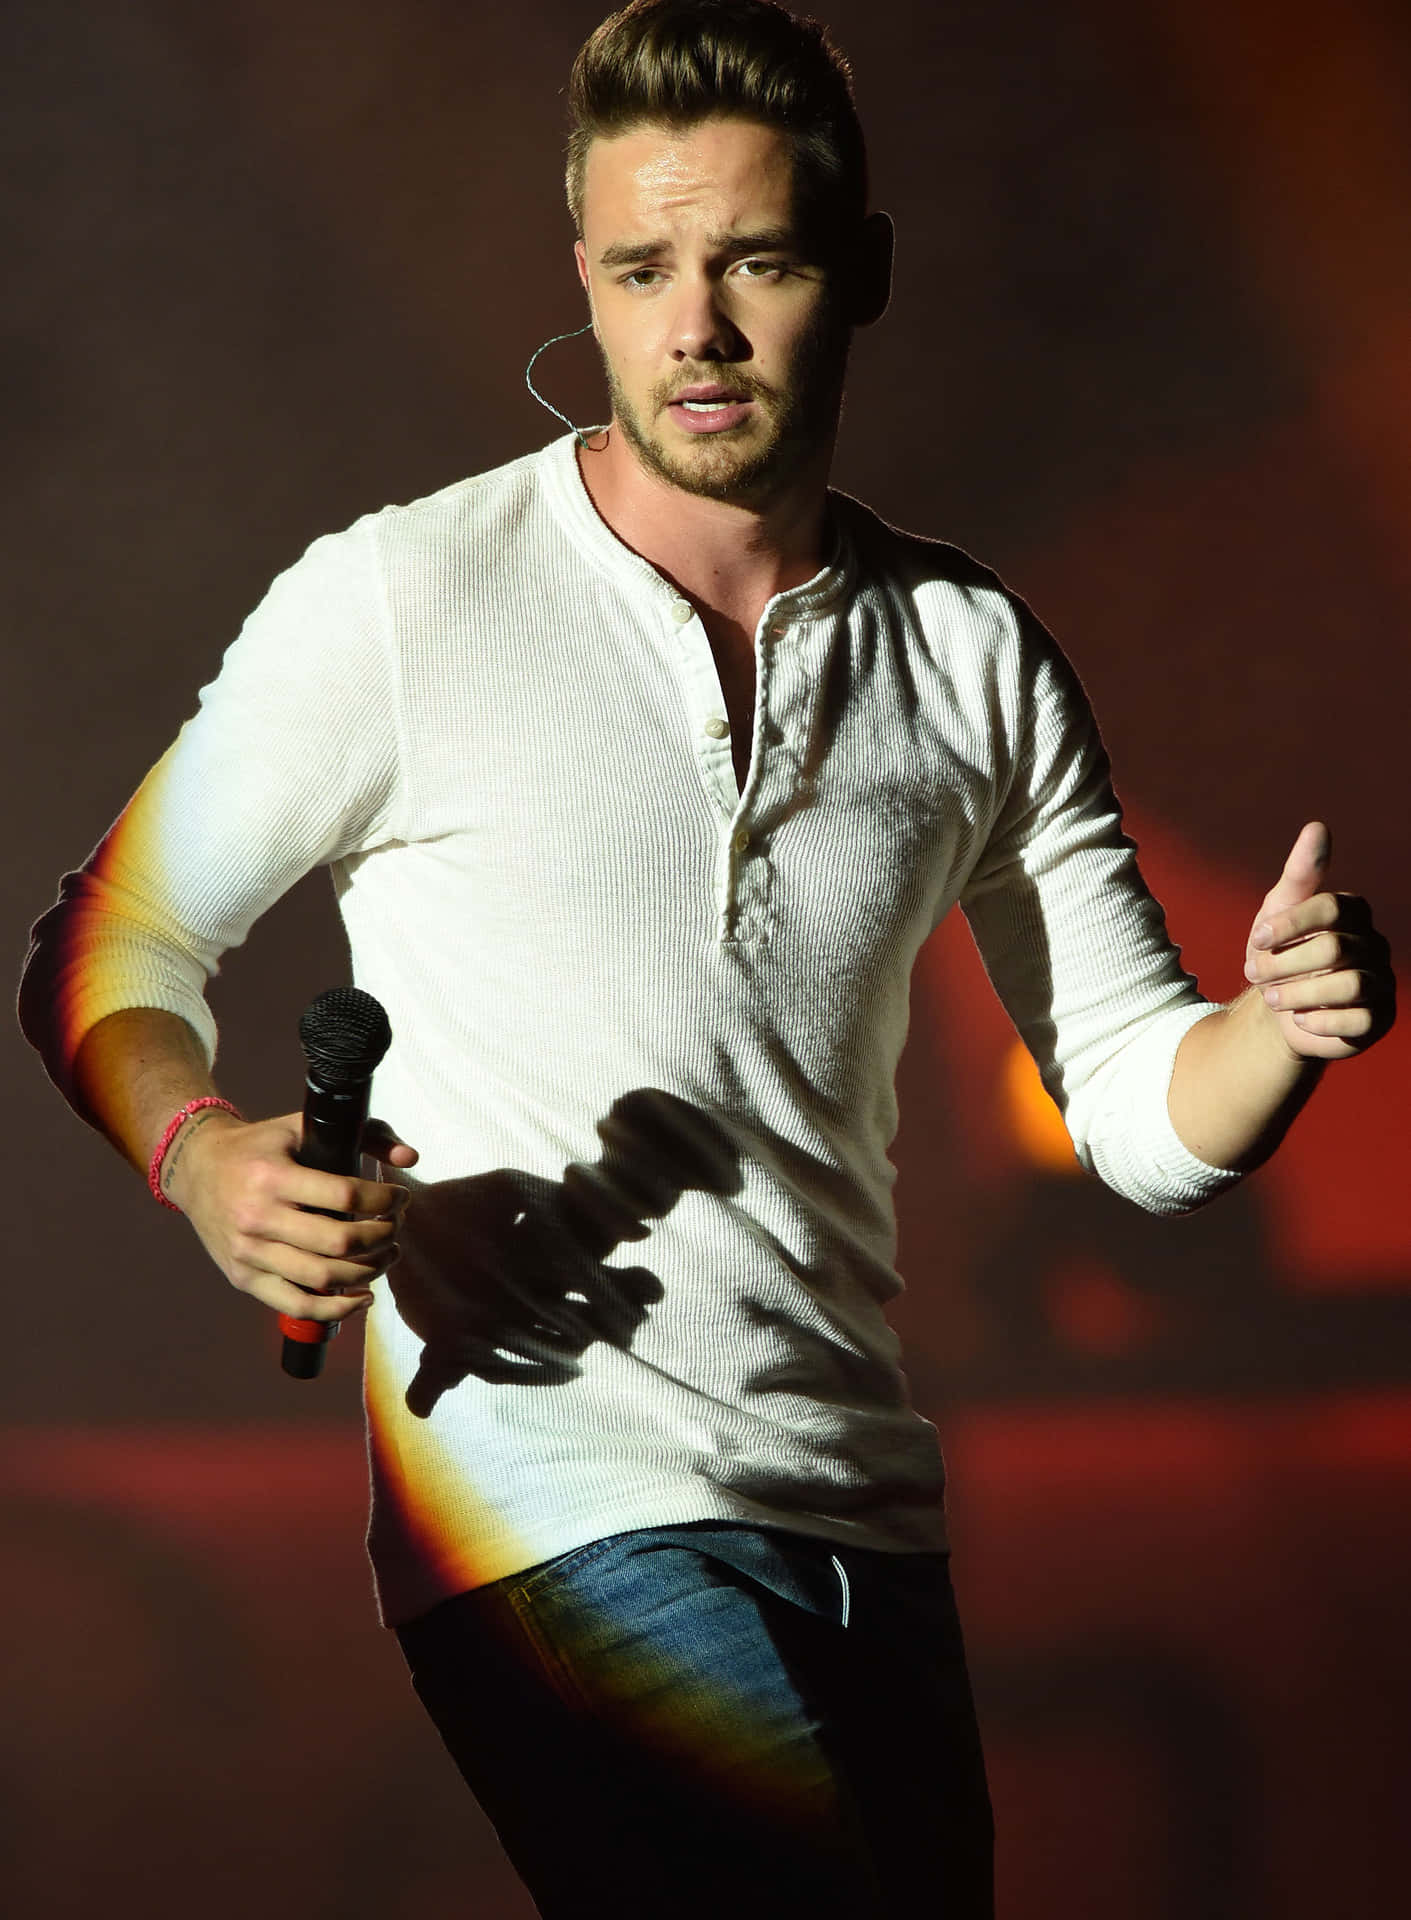 Liam Payne Performing At London's O2 Arena